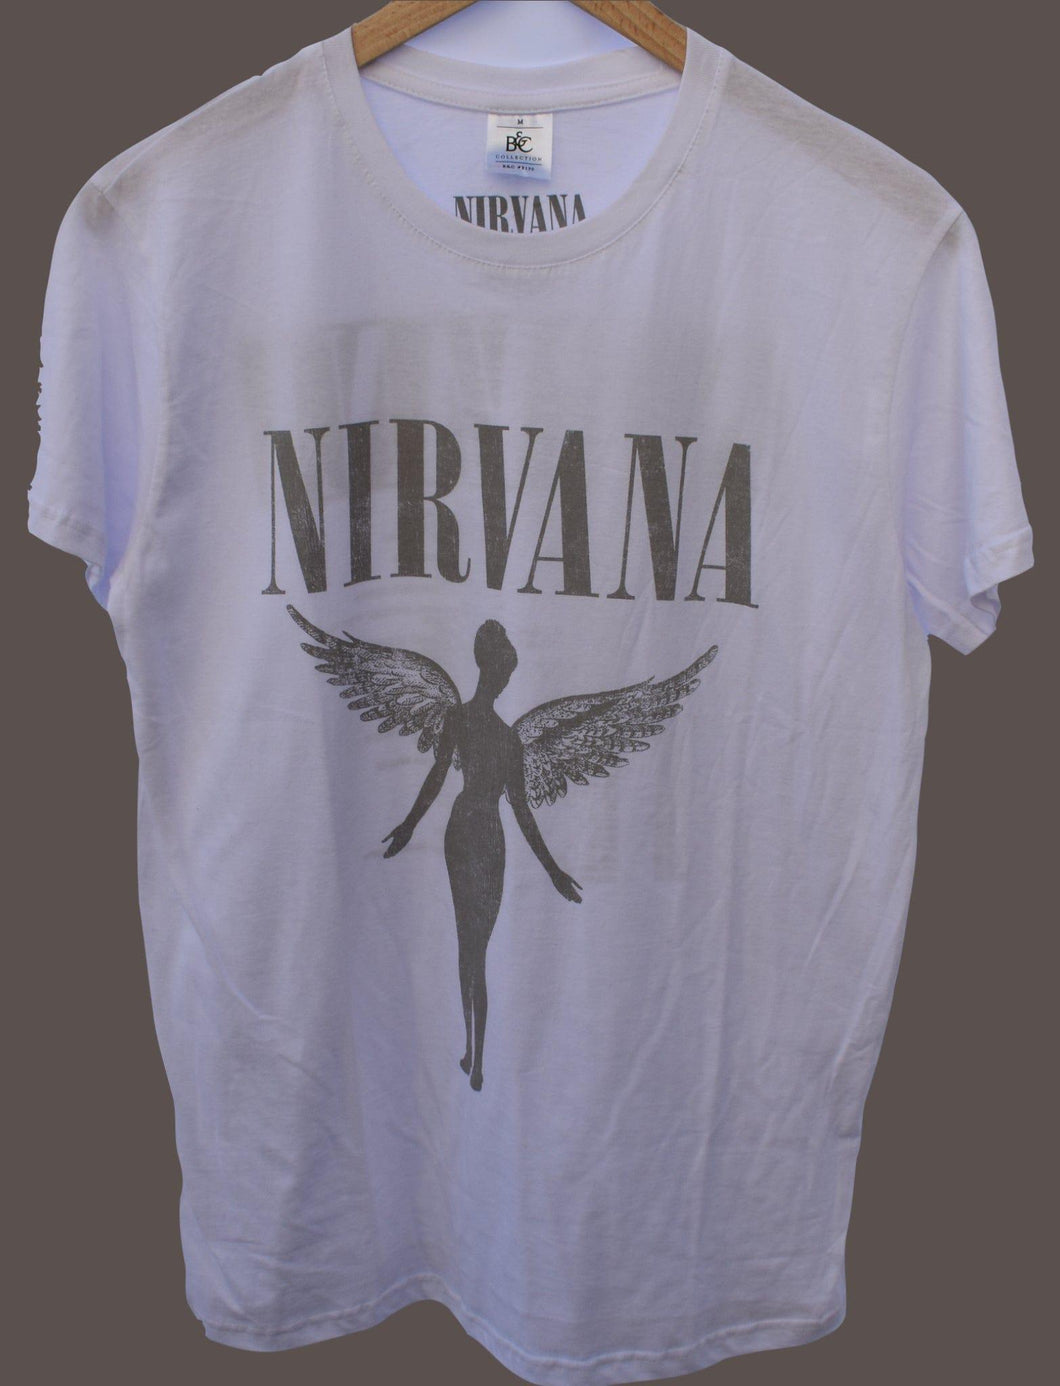 Nirvana: In Utero Tour T-shirt - StitchStreet.com